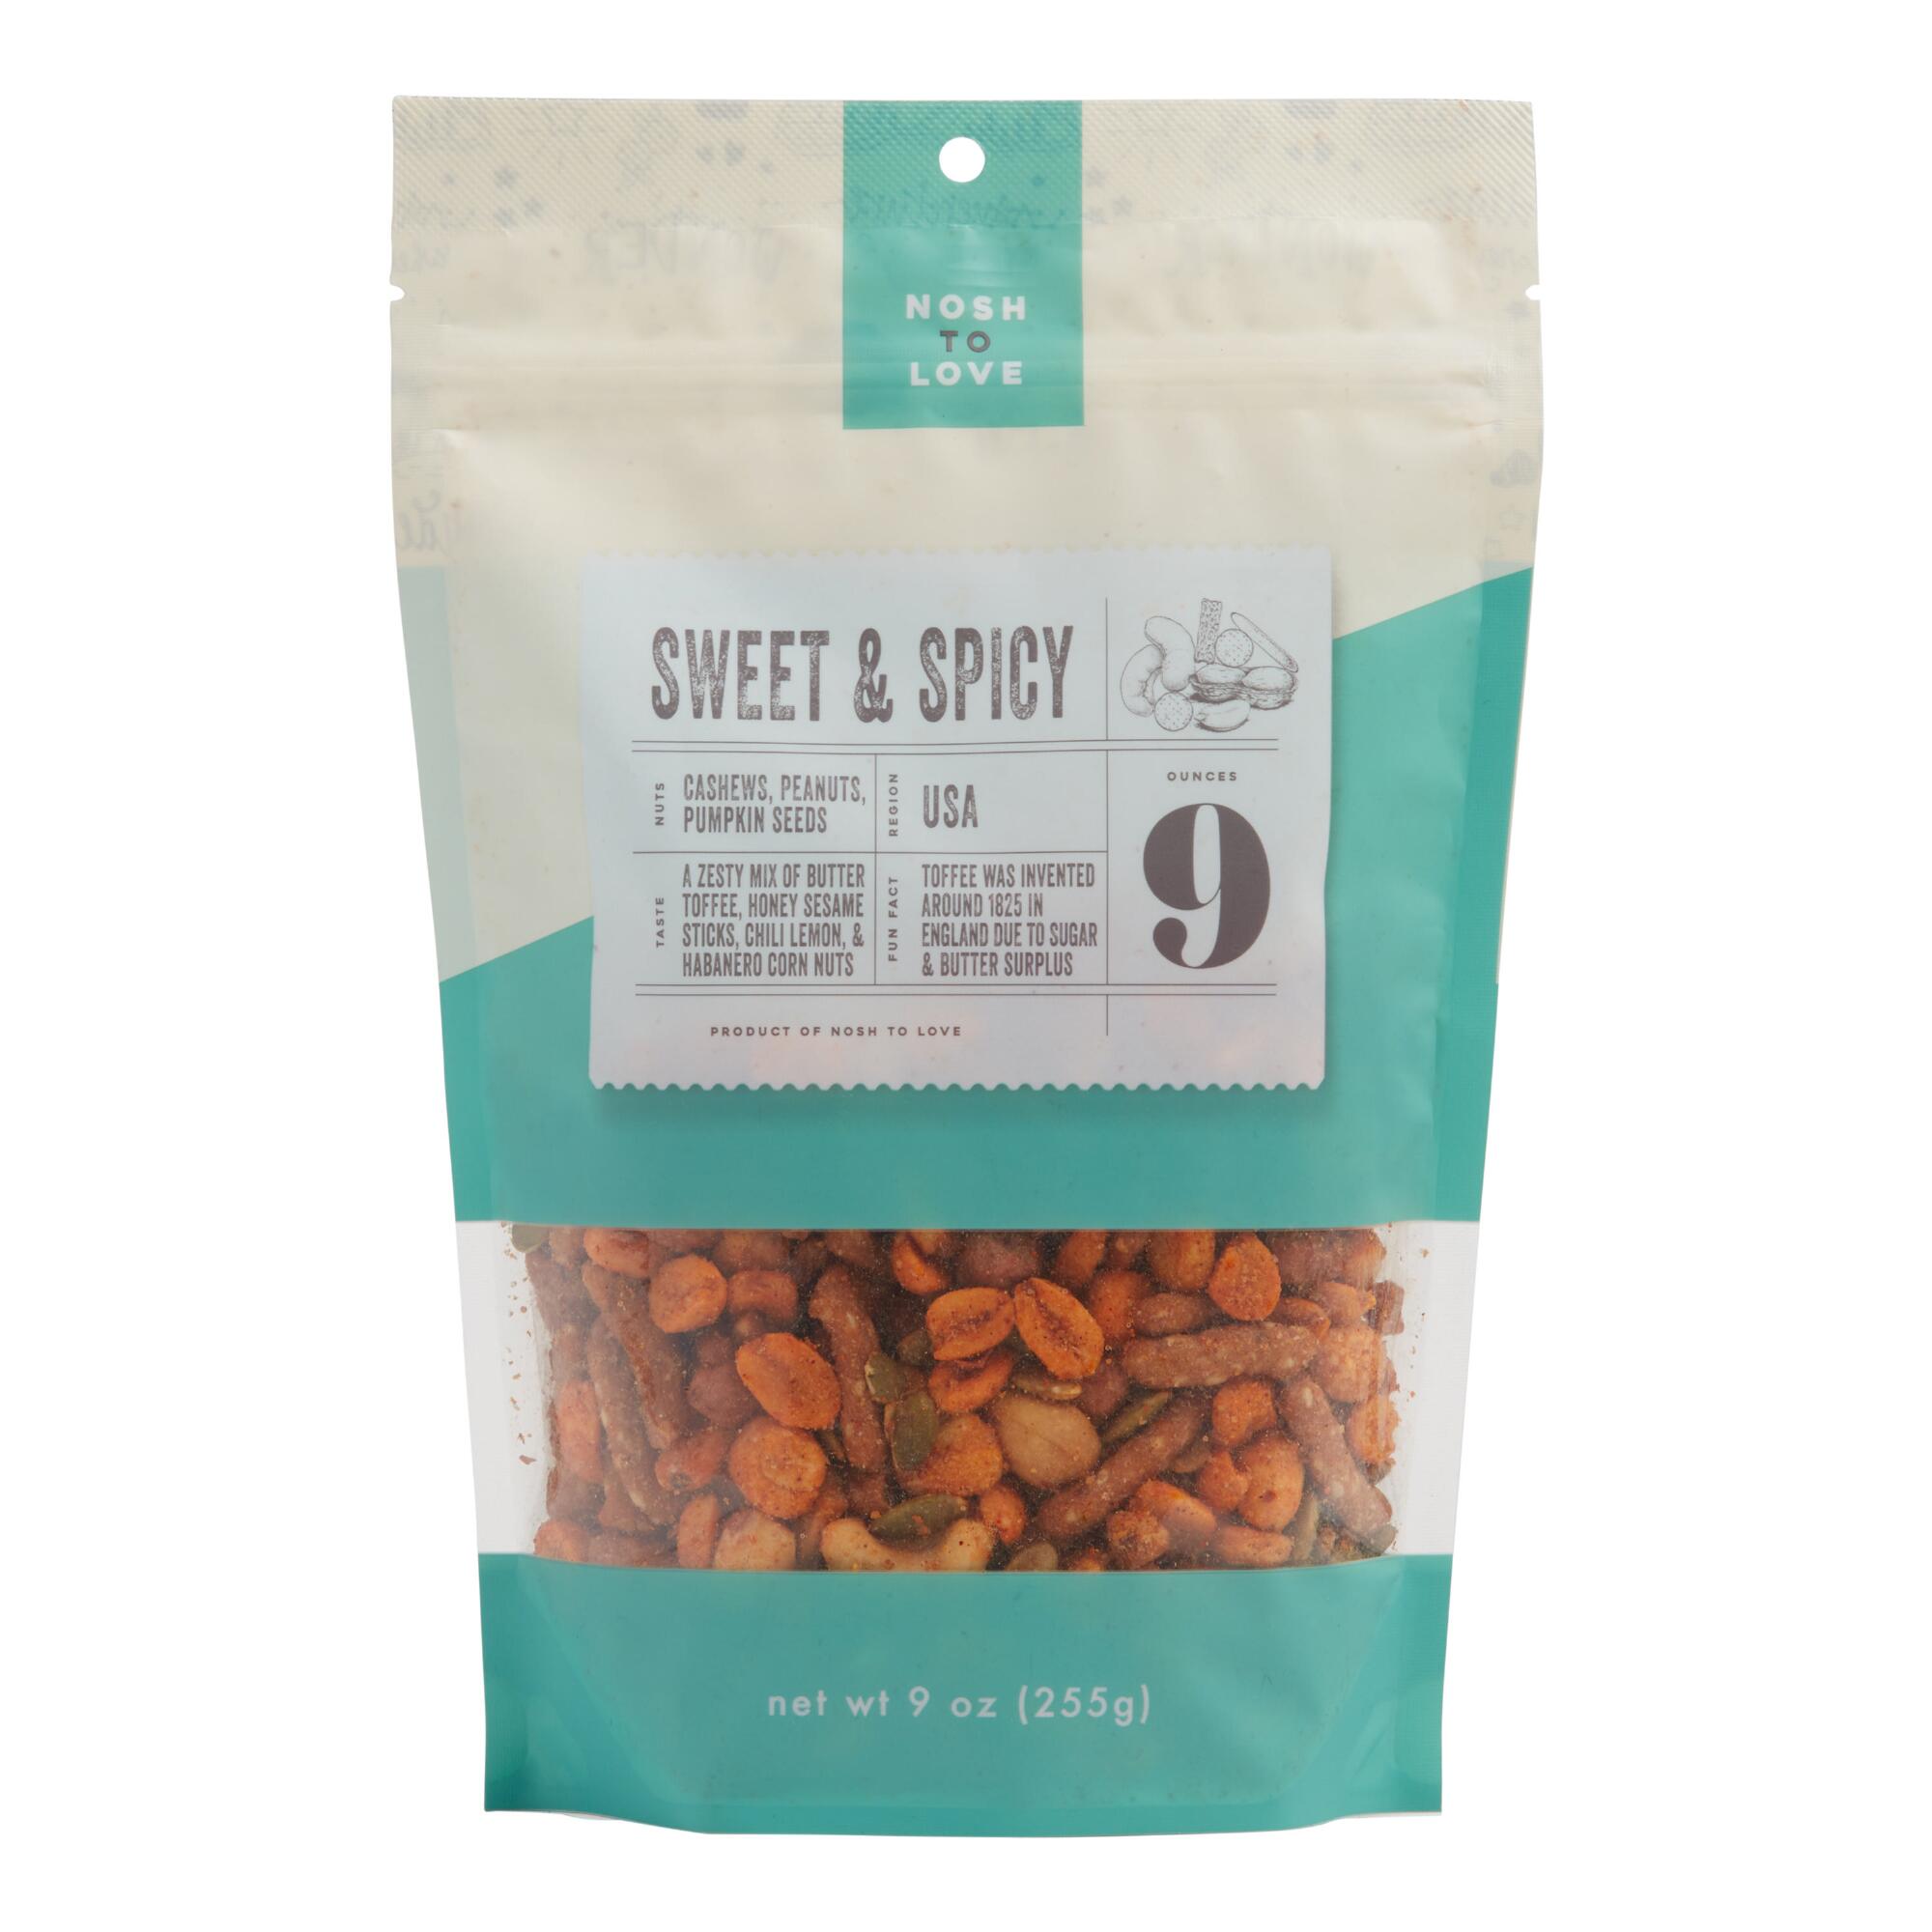 Nosh to Love Sweet & Spicy Snack Mix by World Market